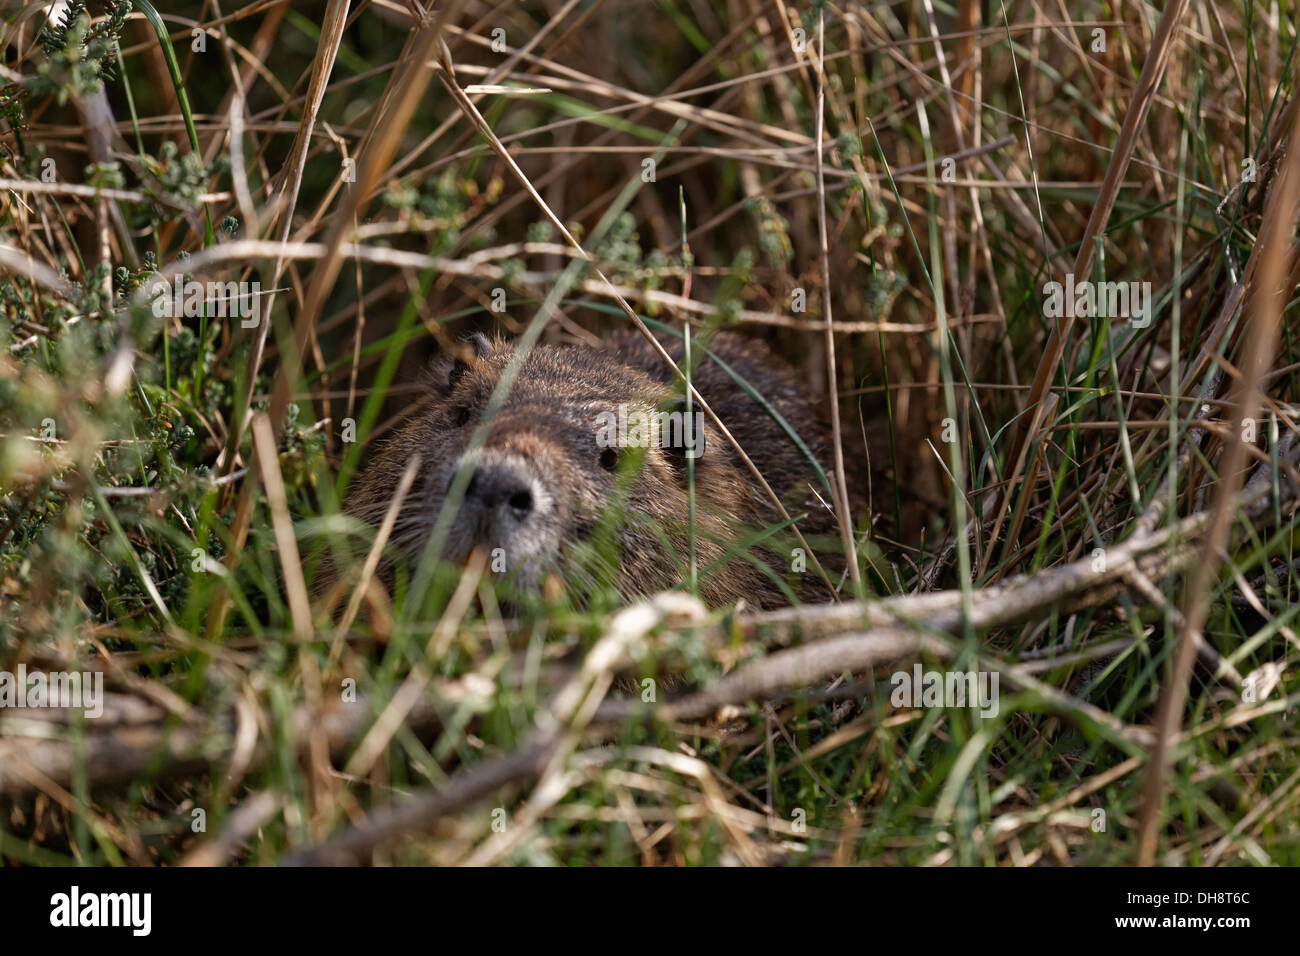 Nutria Myocastor coypus in grass, close-up Stock Photo